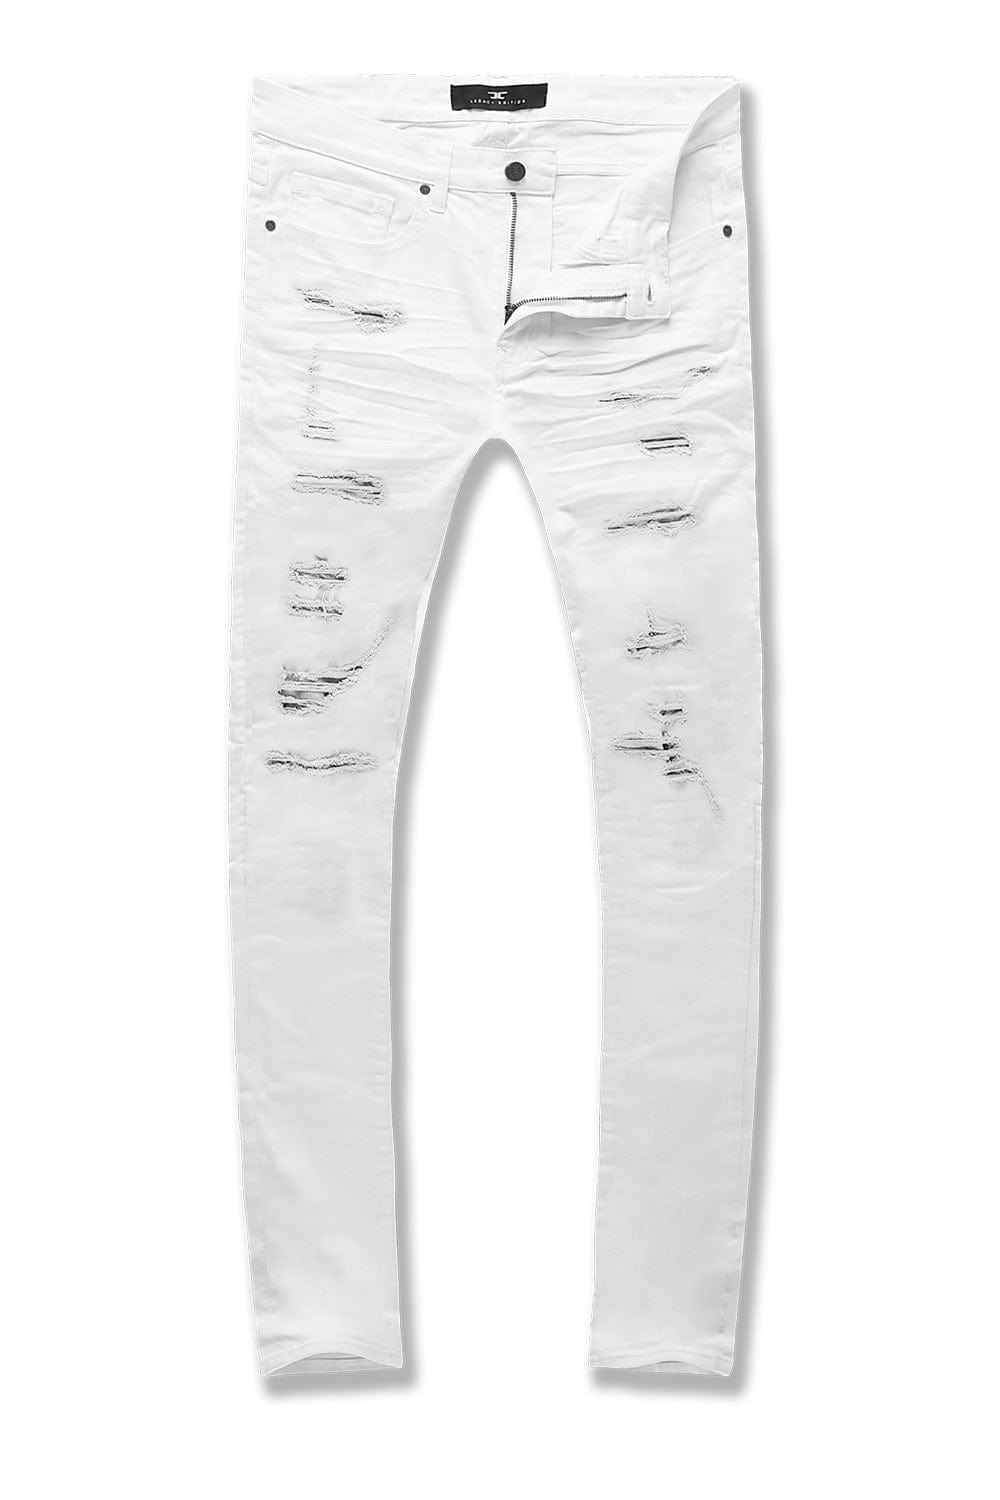 Jordan Craig Ross - Tribeca Twill Pants (Name Your Price) White / 36/30